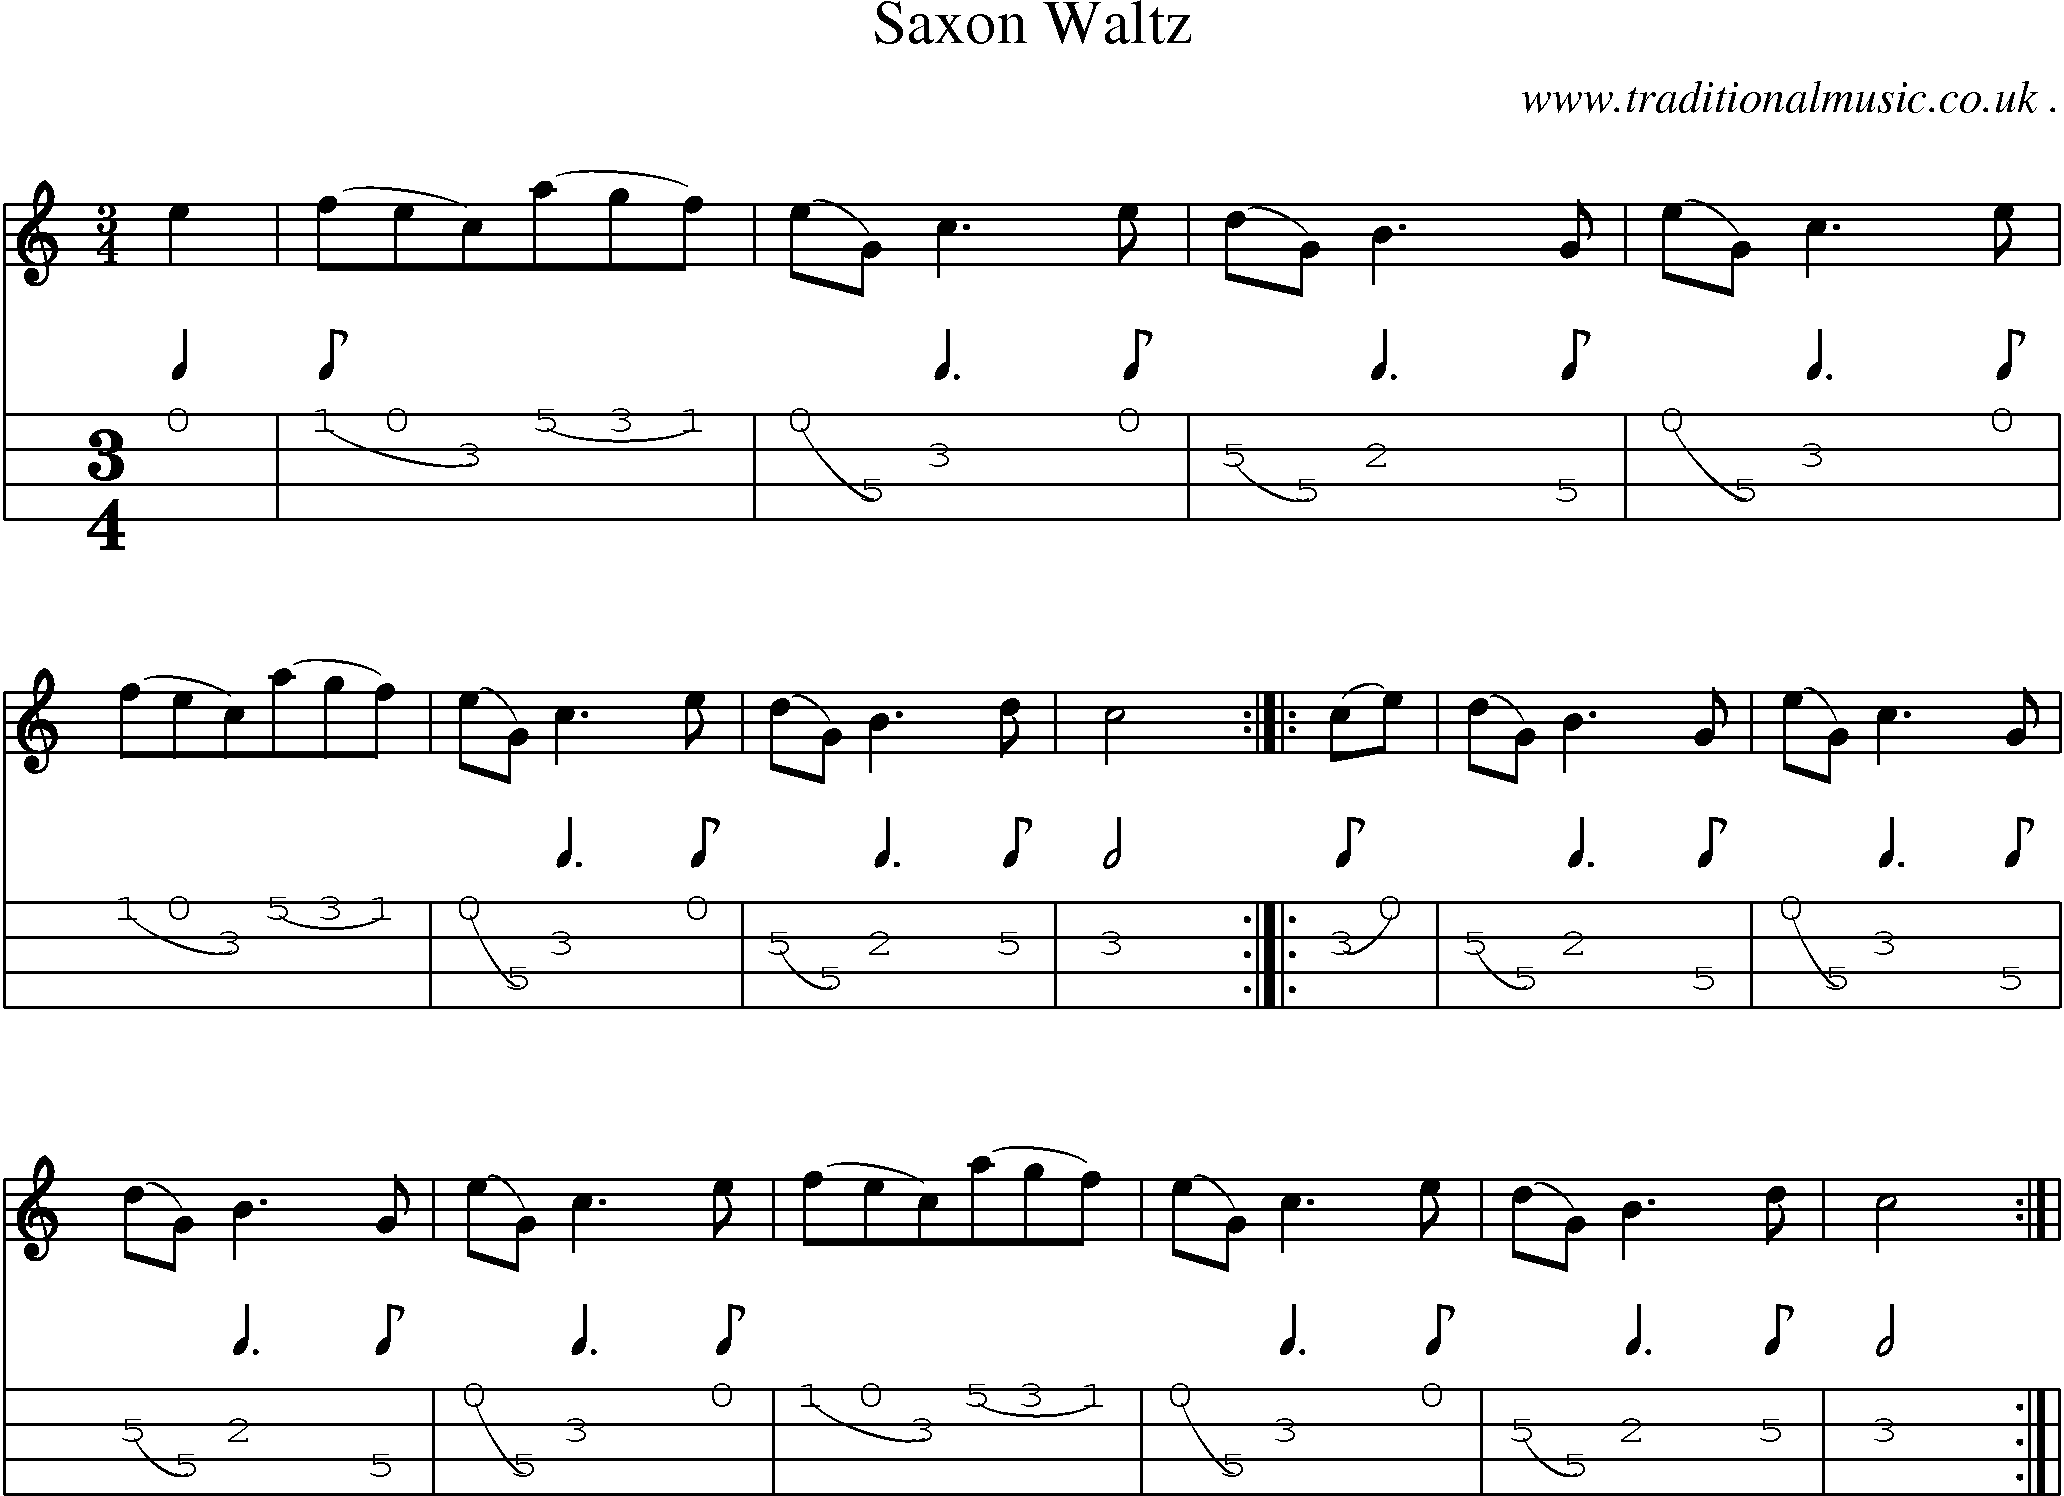 Sheet-Music and Mandolin Tabs for Saxon Waltz